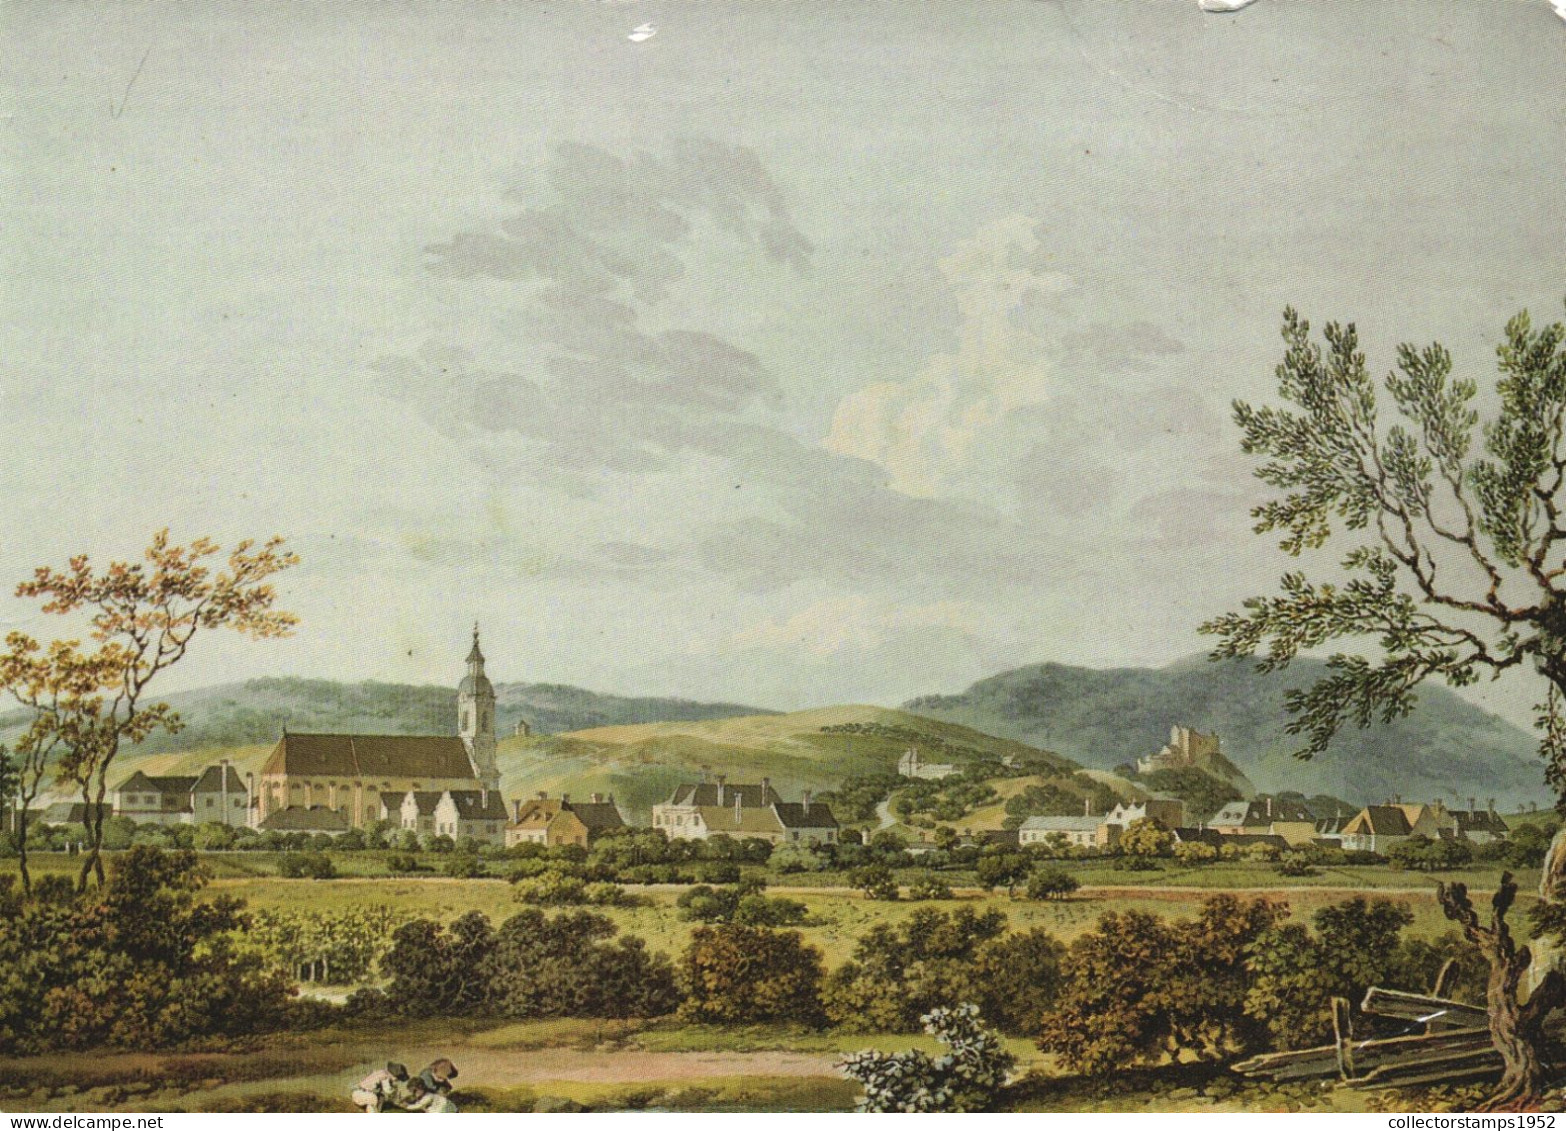 MARIA ENZERSDORF IN 1790, ARCHITECTURE, CHURCH, ILLUSTRATION, AUSTRIA, POSTCARD - Maria Enzersdorf